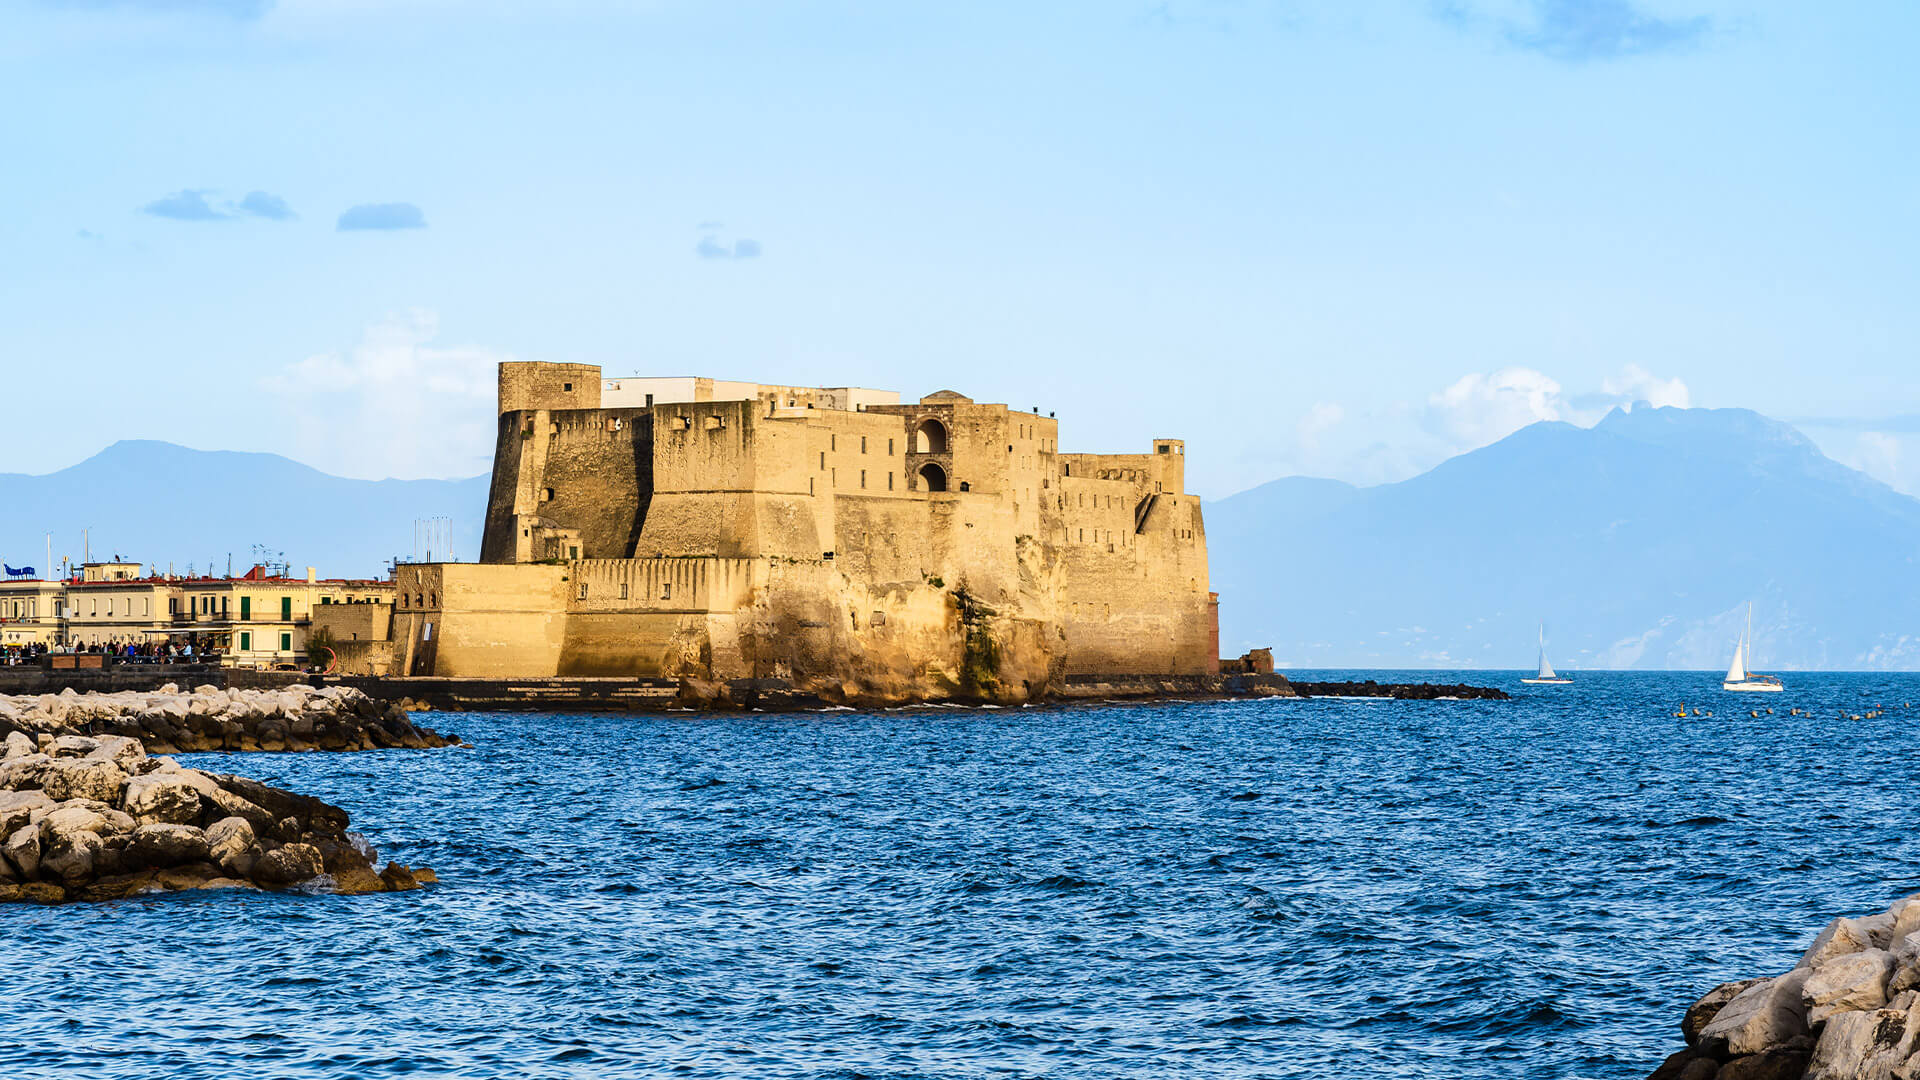 Festungen: Castel Sant’Elmo, Castel dell'Ovo & Castel Nuovo